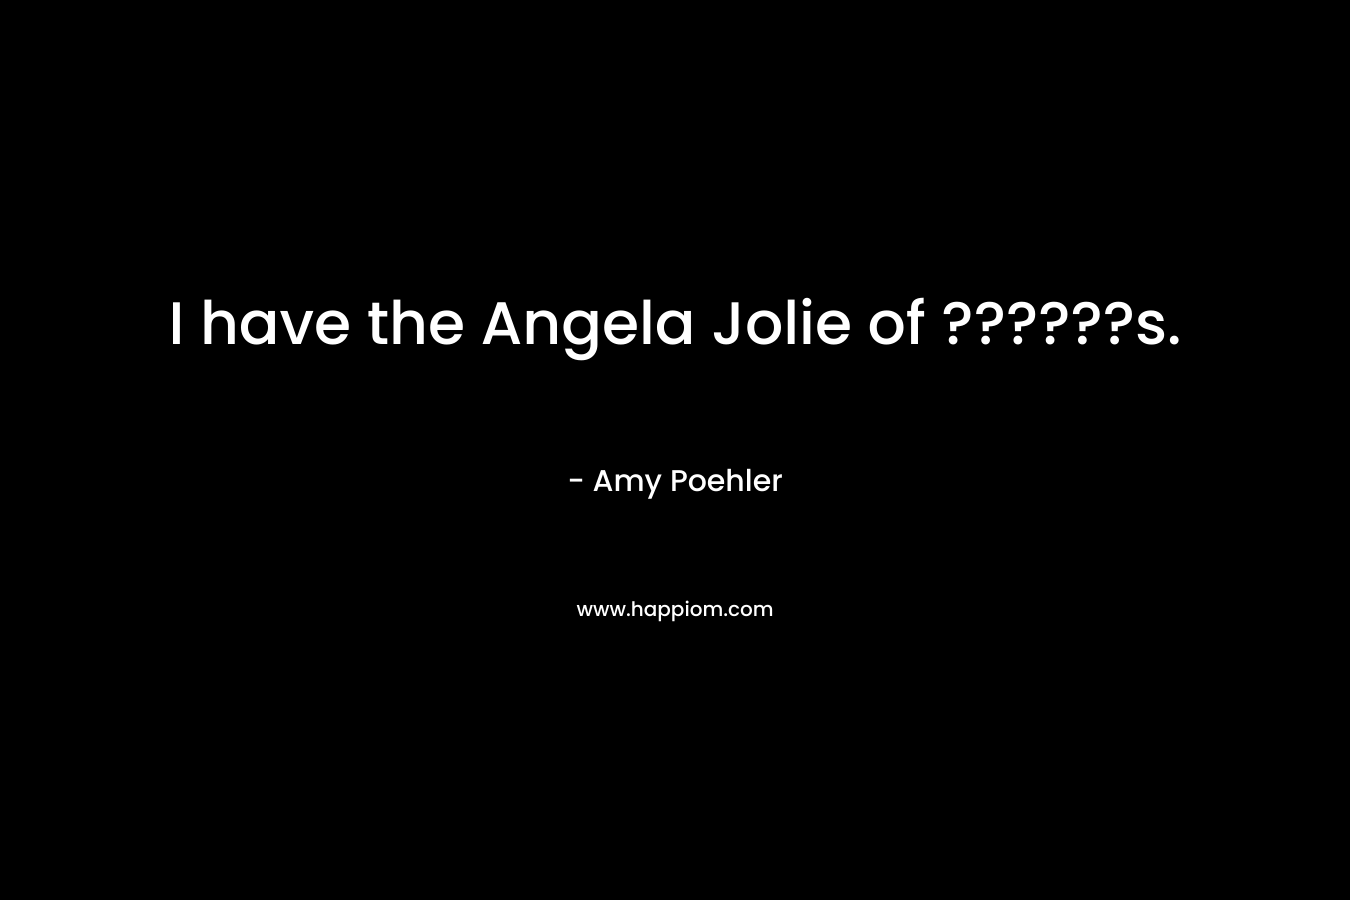 I have the Angela Jolie of ??????s. – Amy Poehler